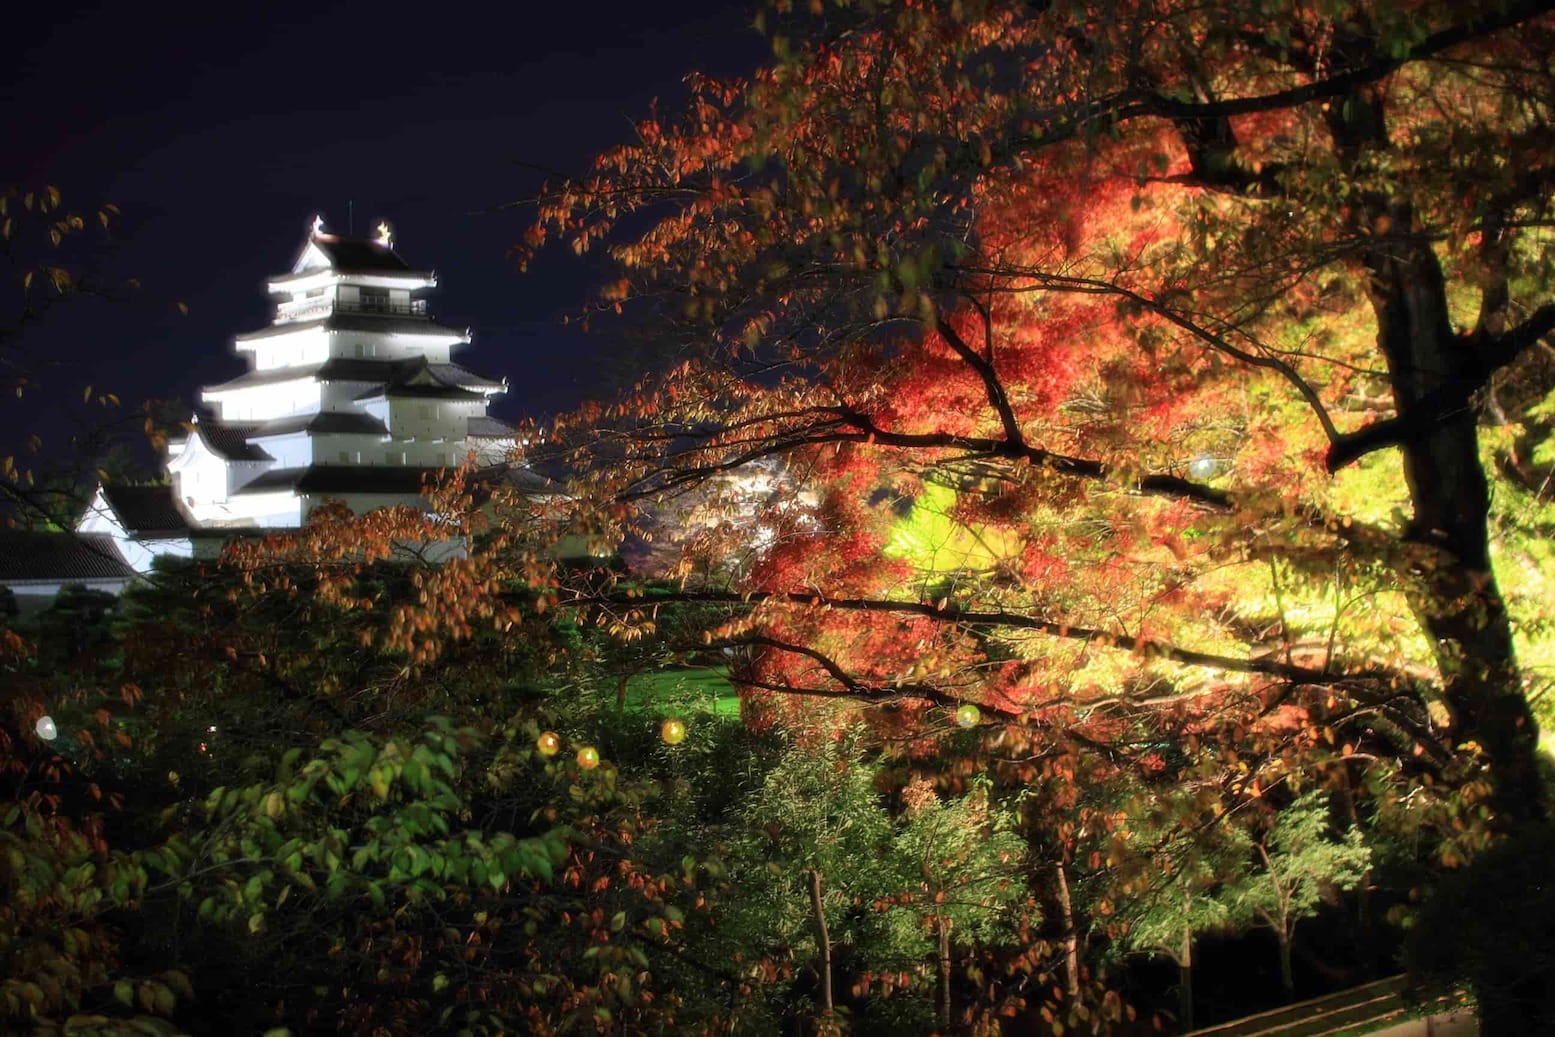 Tsuruga Castle Autumn Light Up Event